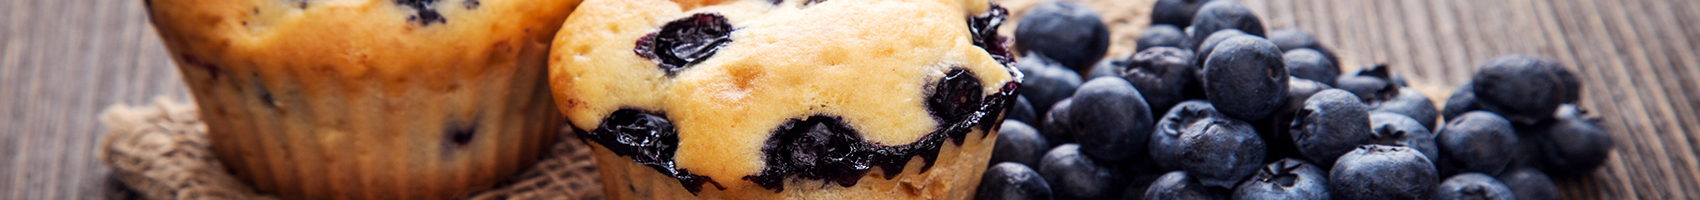 freshly baked blueberry muffins